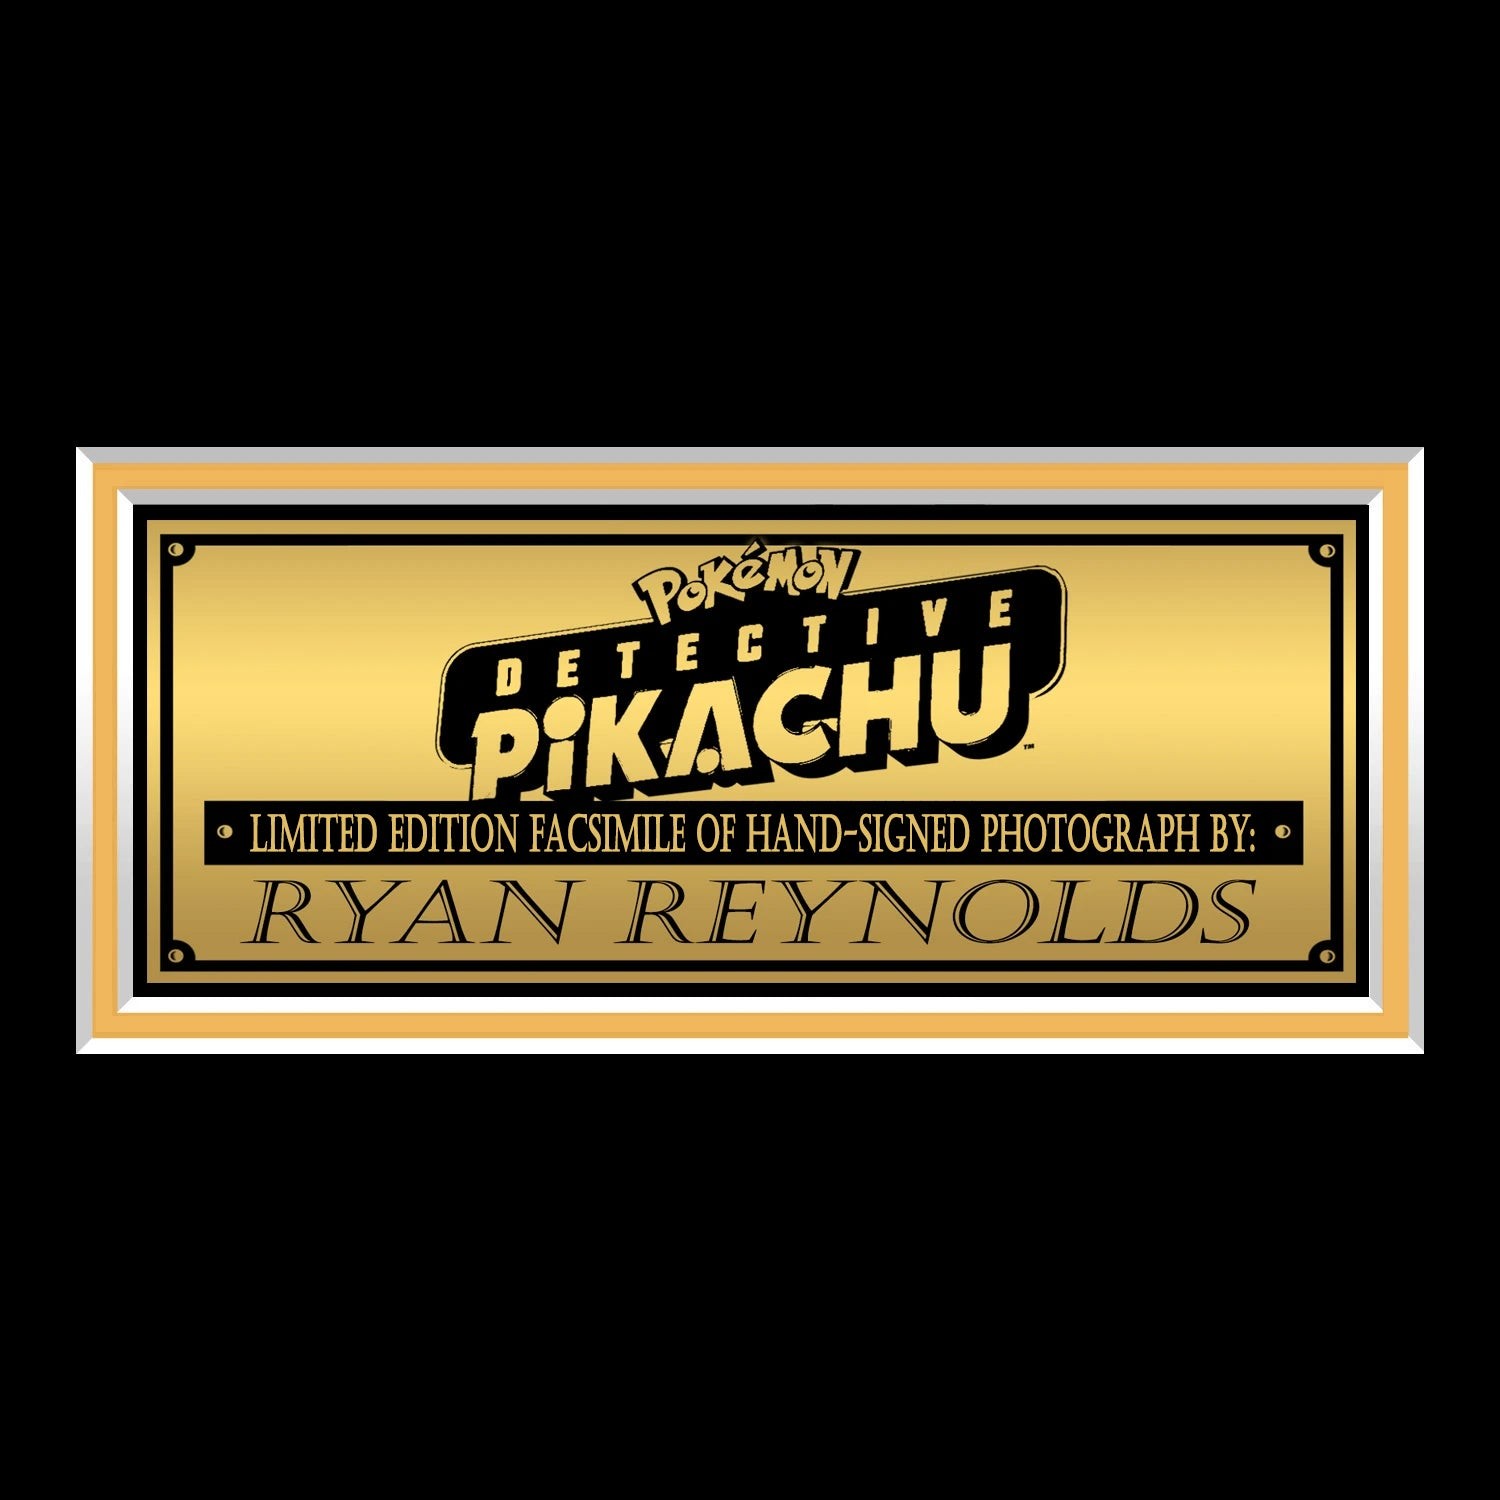 eArtFilm.com: Original Movie Posters for Sale على X: Happy Birthday, Ryan  Reynolds!  #RyanReynolds #actors #acting  #DetectivePikachu #Pokemon #movie #movies #poster #posters #film #cinema  #movieposter #movieposters